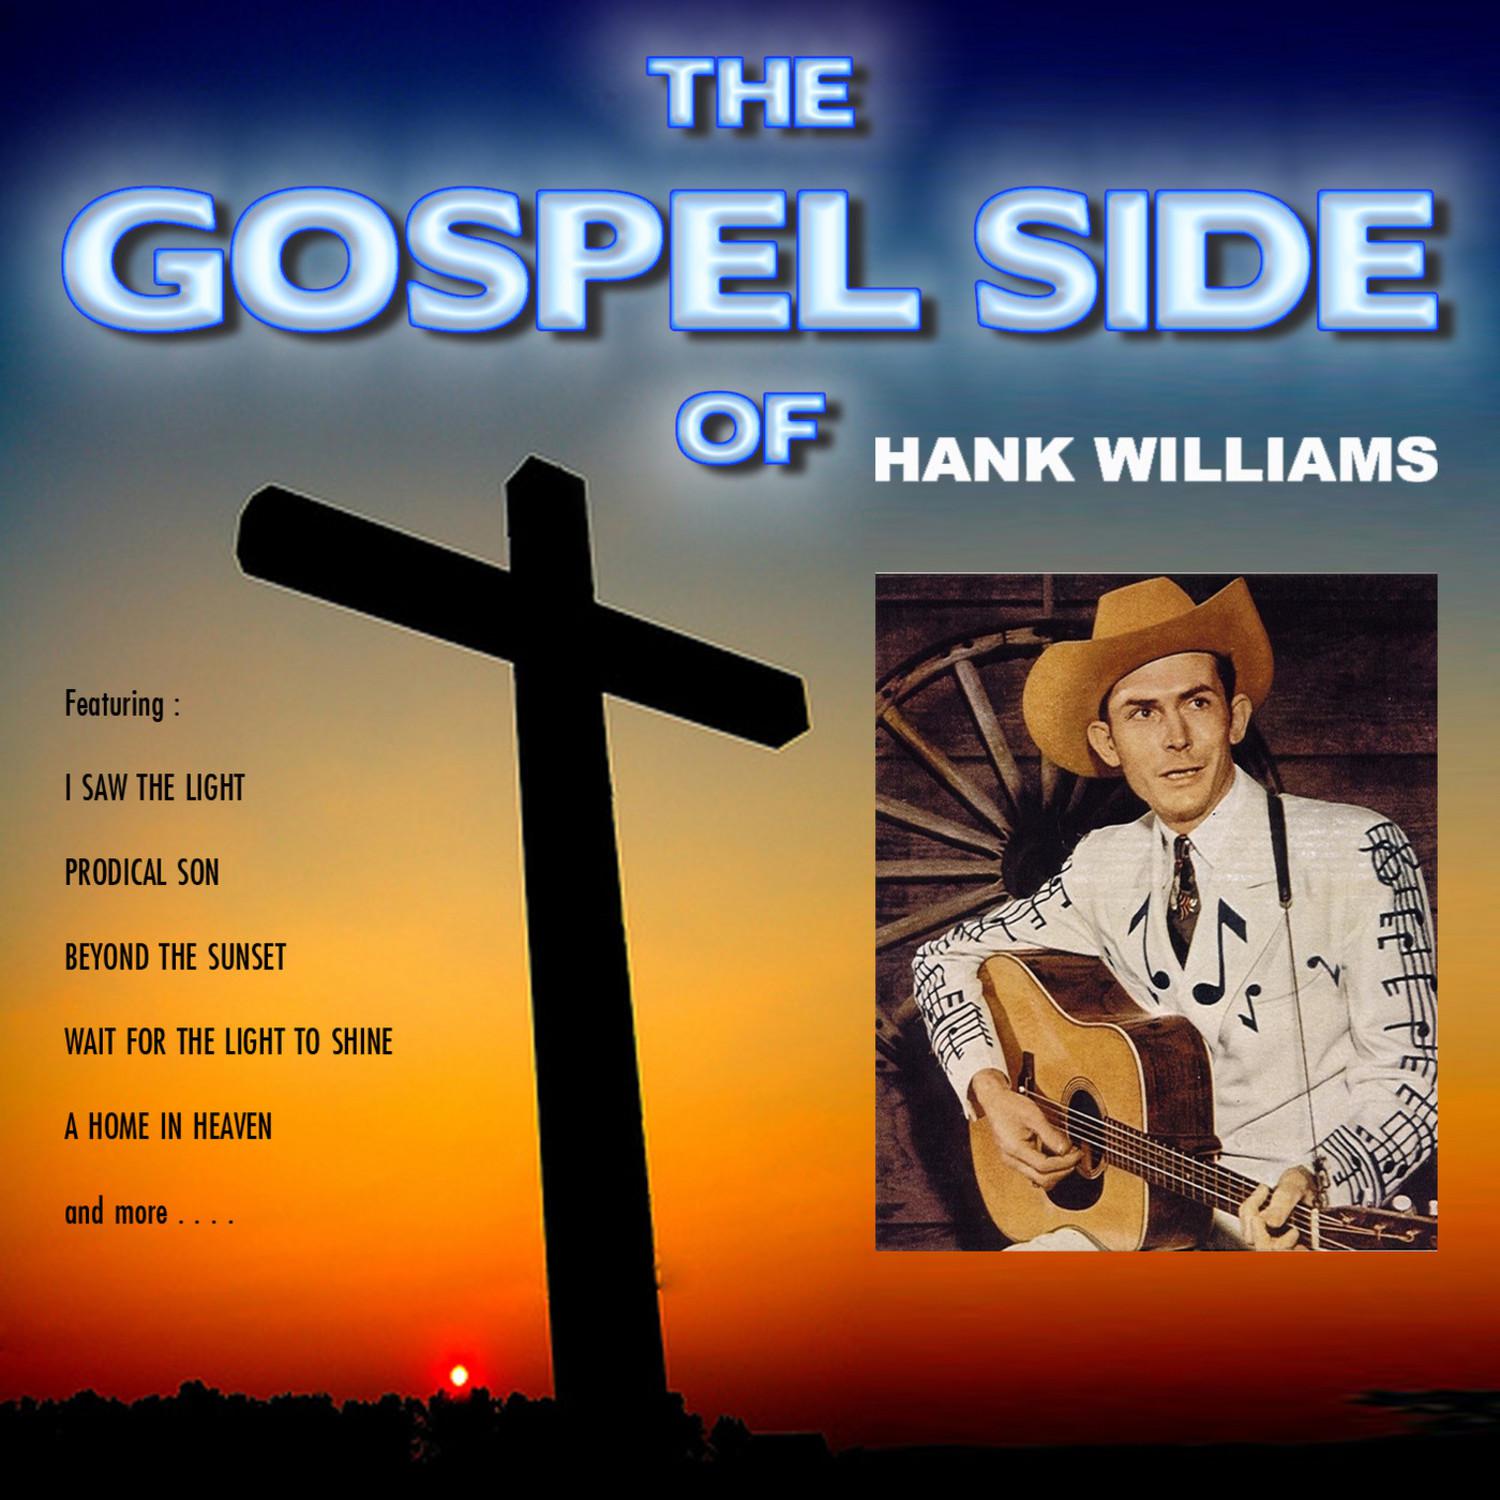 The Gospel Side of Hank Williams